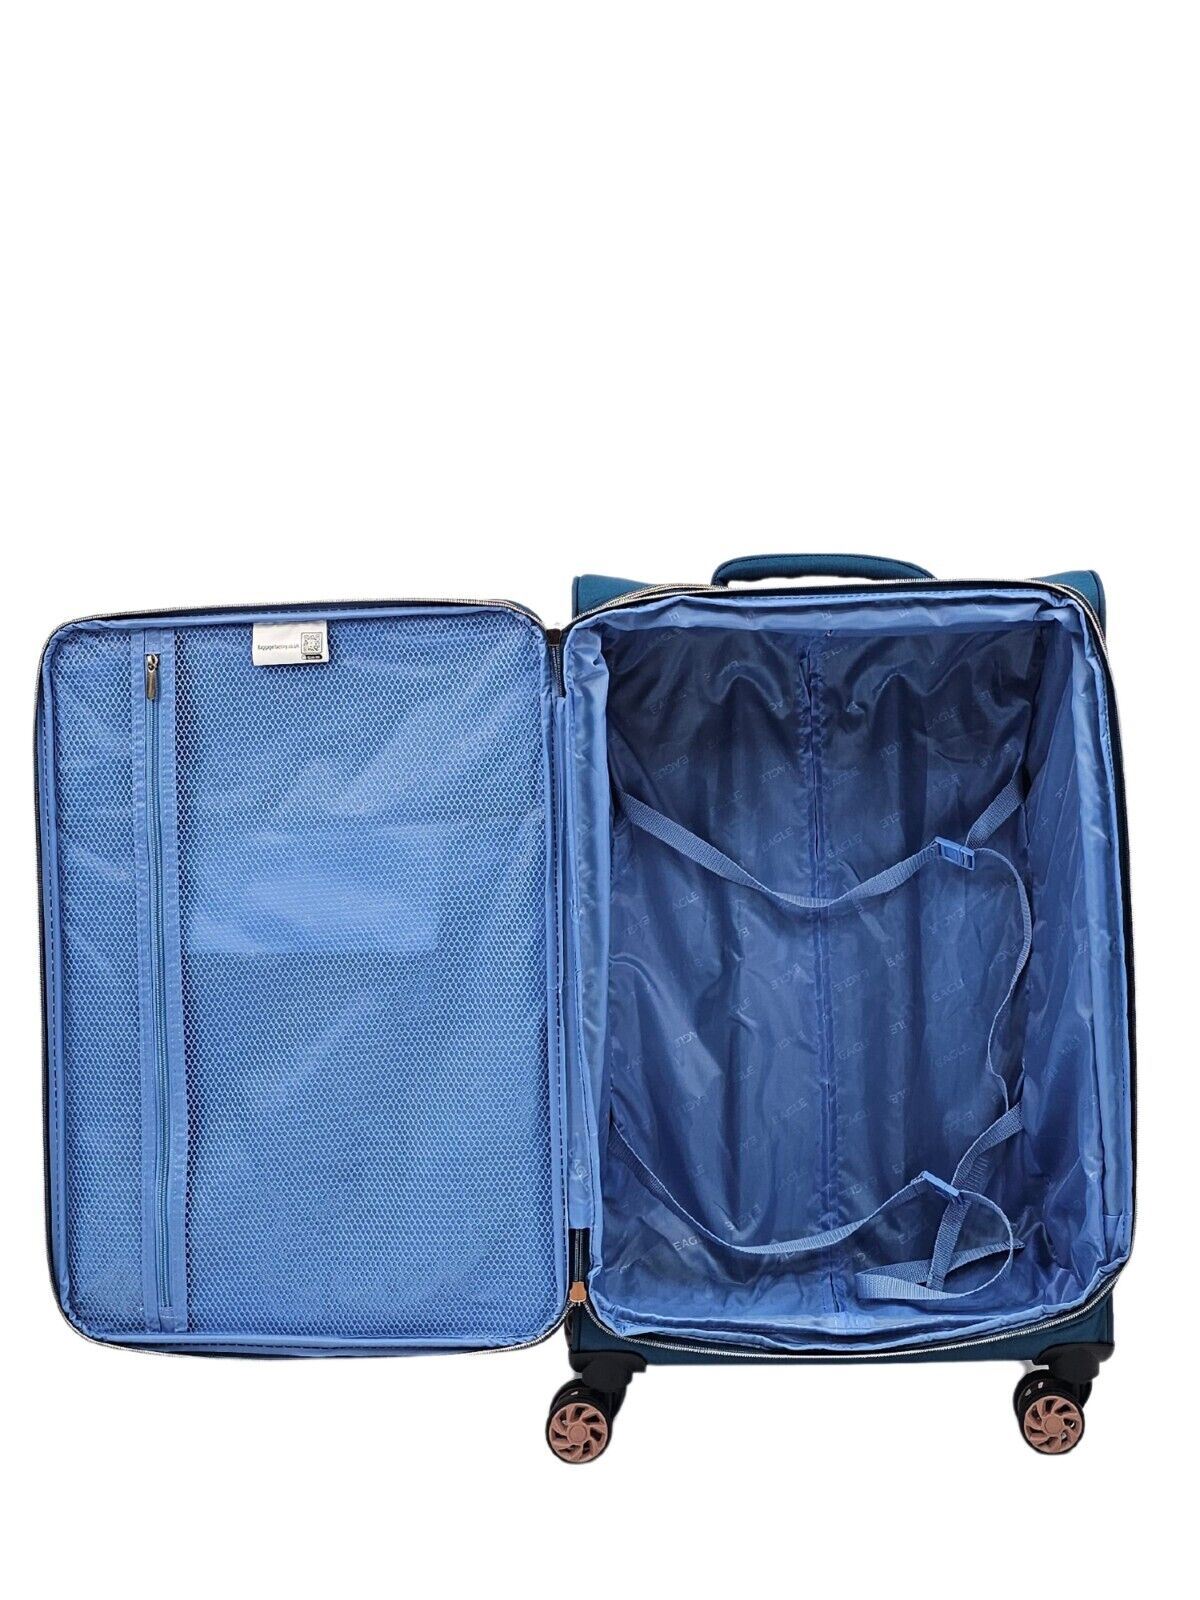 Birmingham Medium Soft Shell Suitcase in Teal